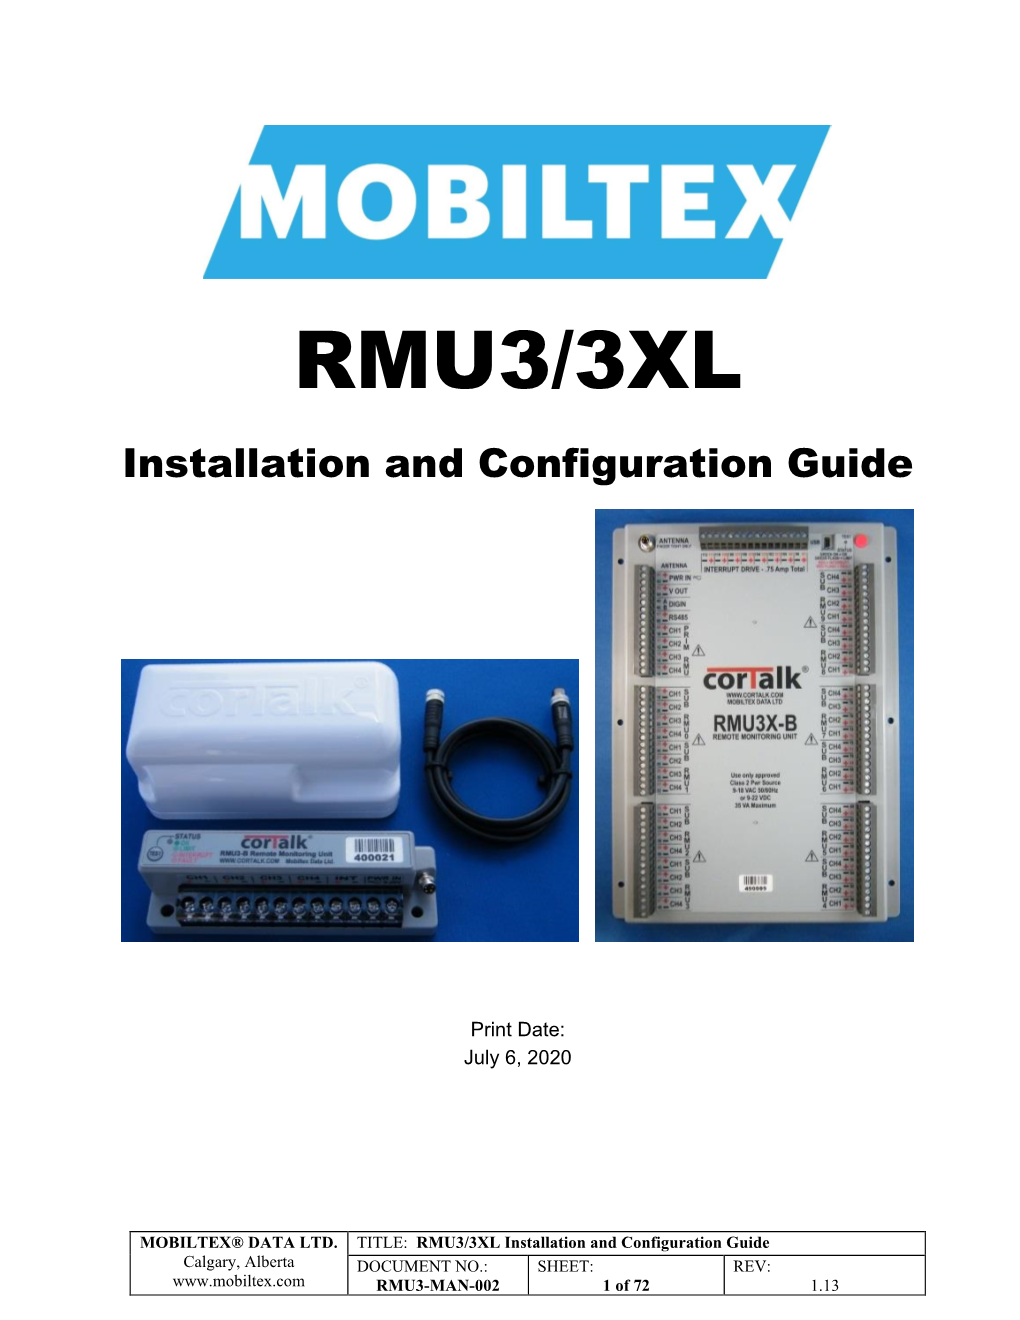 RMU3/3XL Installation and Configuration Guide Calgary, Alberta DOCUMENT NO.: SHEET: REV: RMU3-MAN-002 1 of 72 1.13